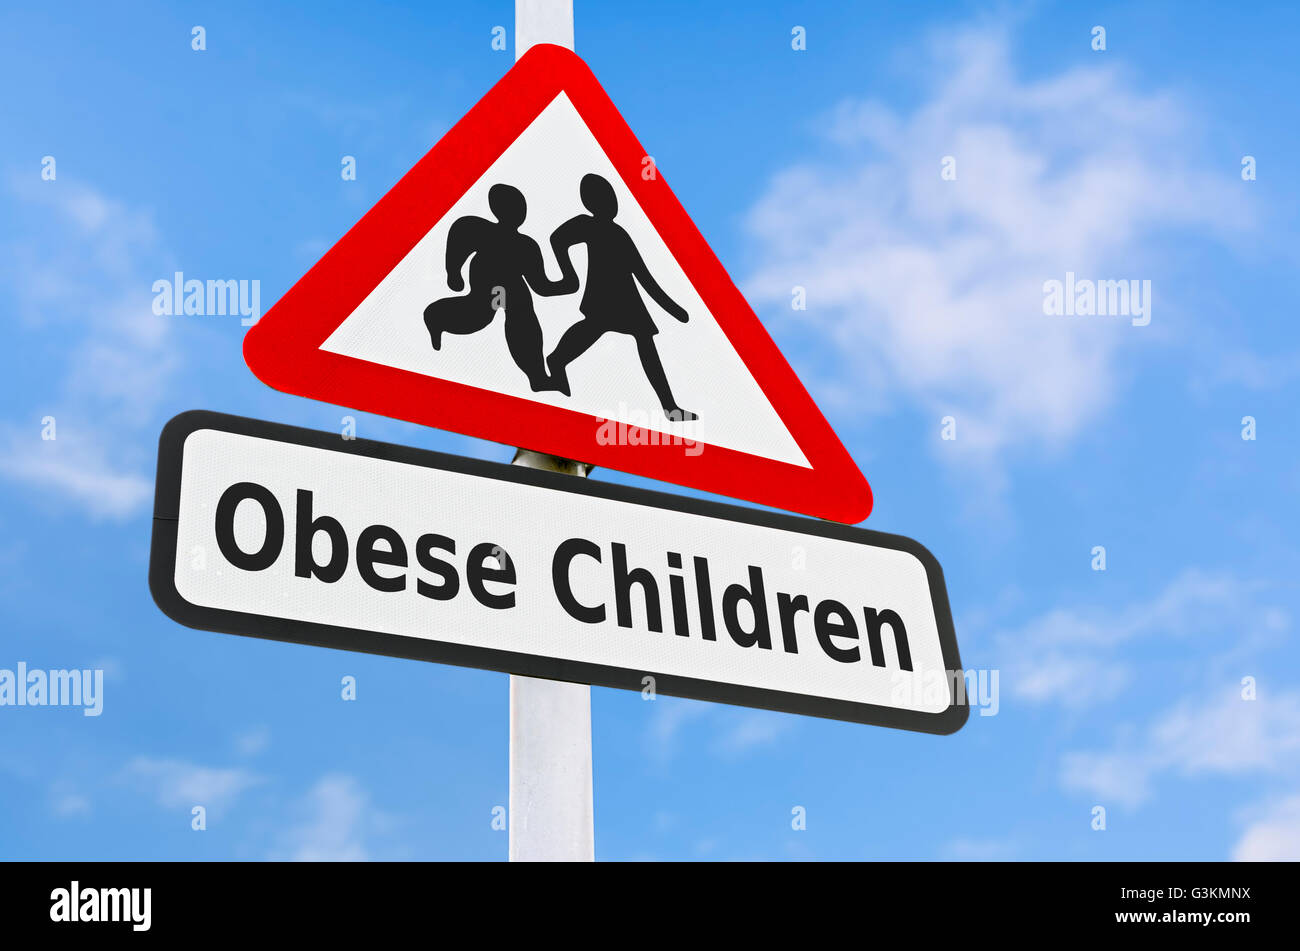 Obese children triangular warning sign. Stock Photo